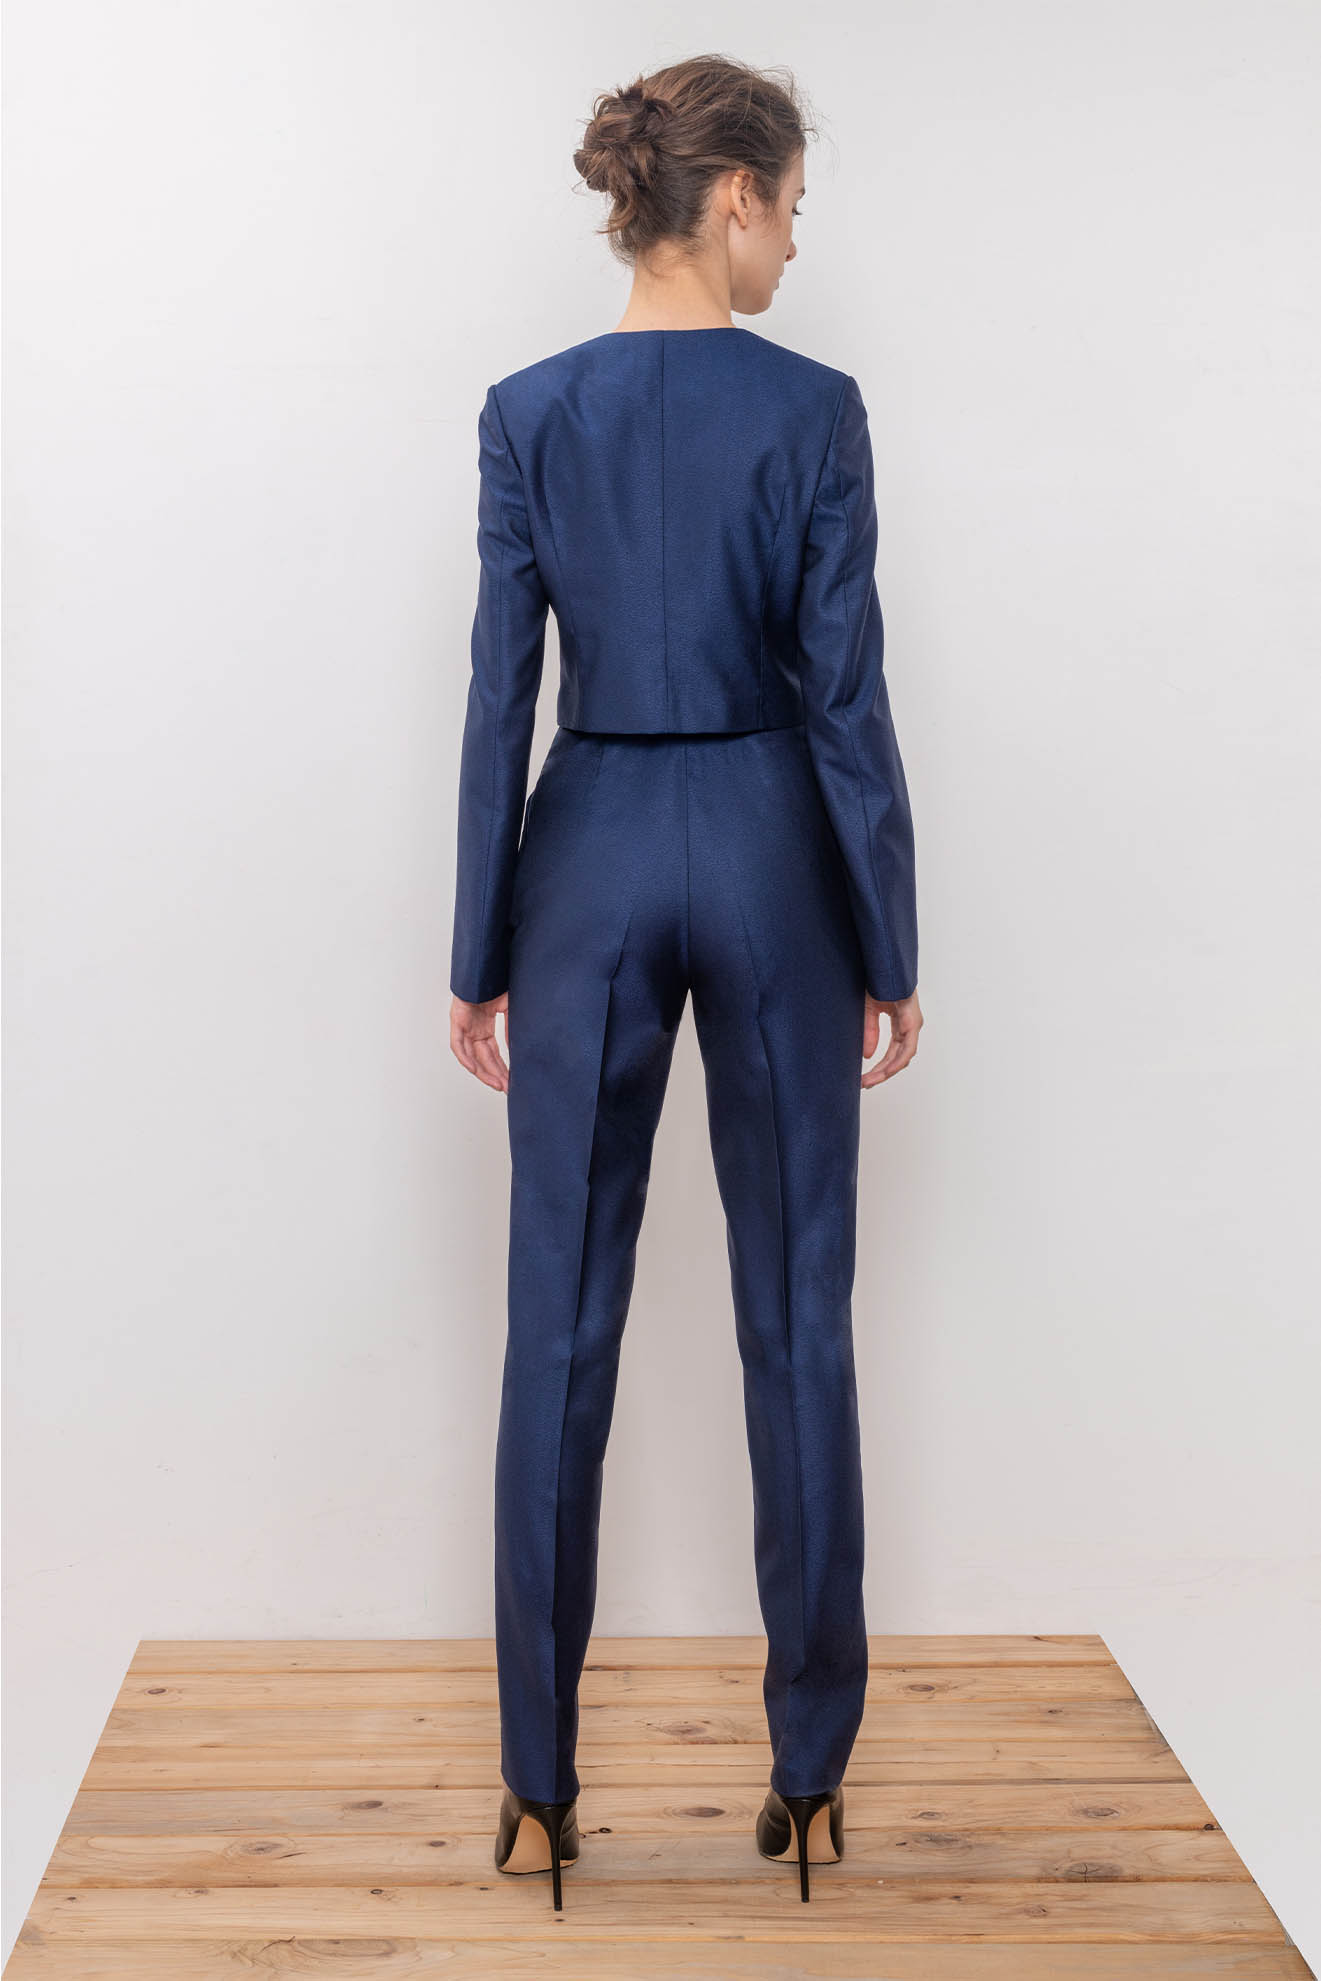 Women's Custom Pant Suit, 100% Wool-Silk Made-to-Measure